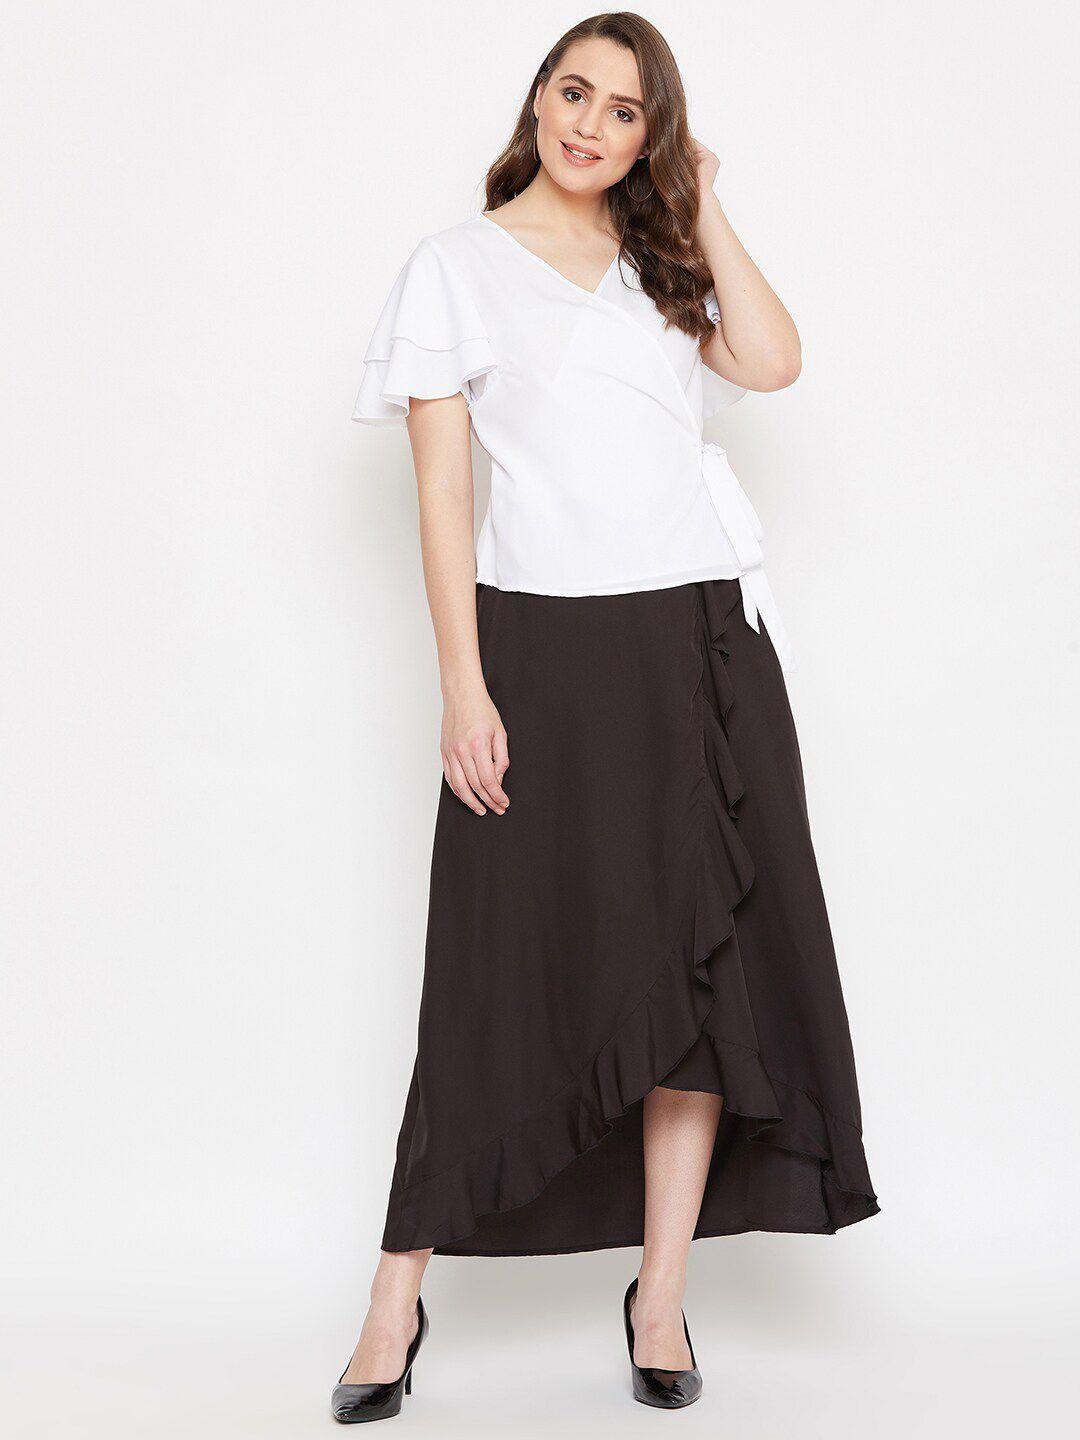 bitterlime women white & black overlapping top with ruffled skirt